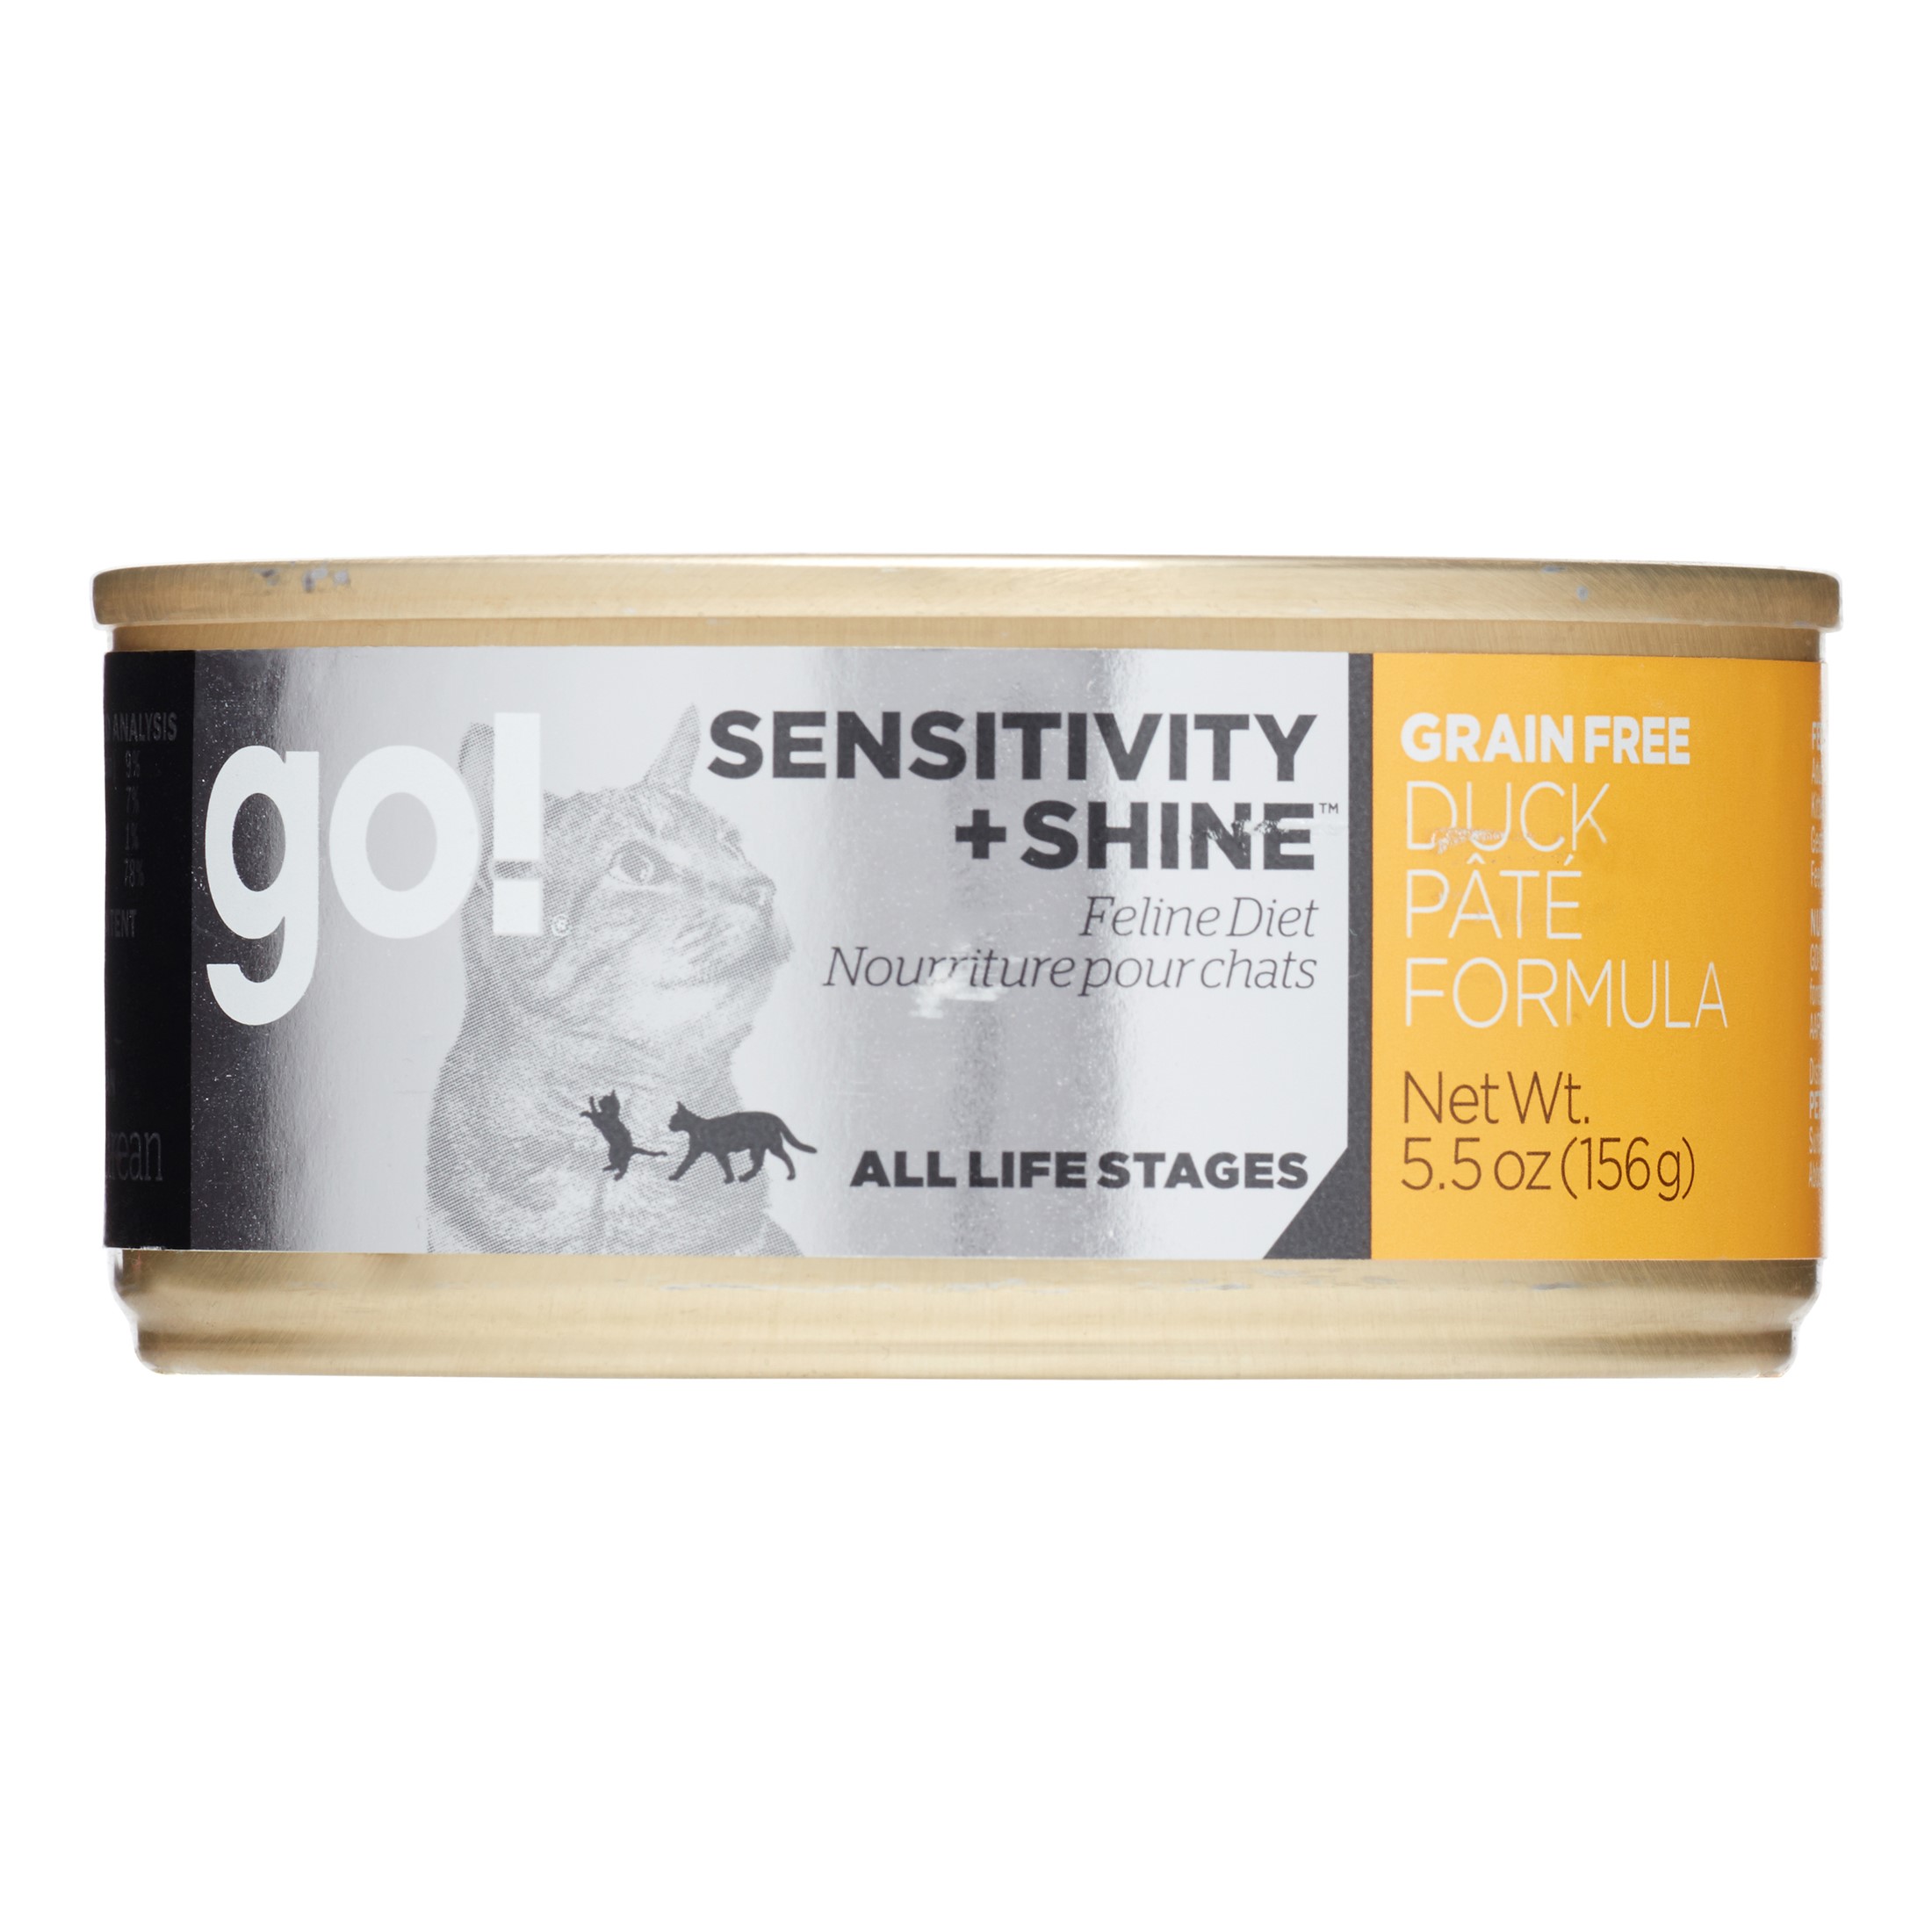 Go! Sensitivity + Shine Grain-Free Duck Pate Wet Cat Food, 5.5 Oz, 24 Count - image 1 of 2